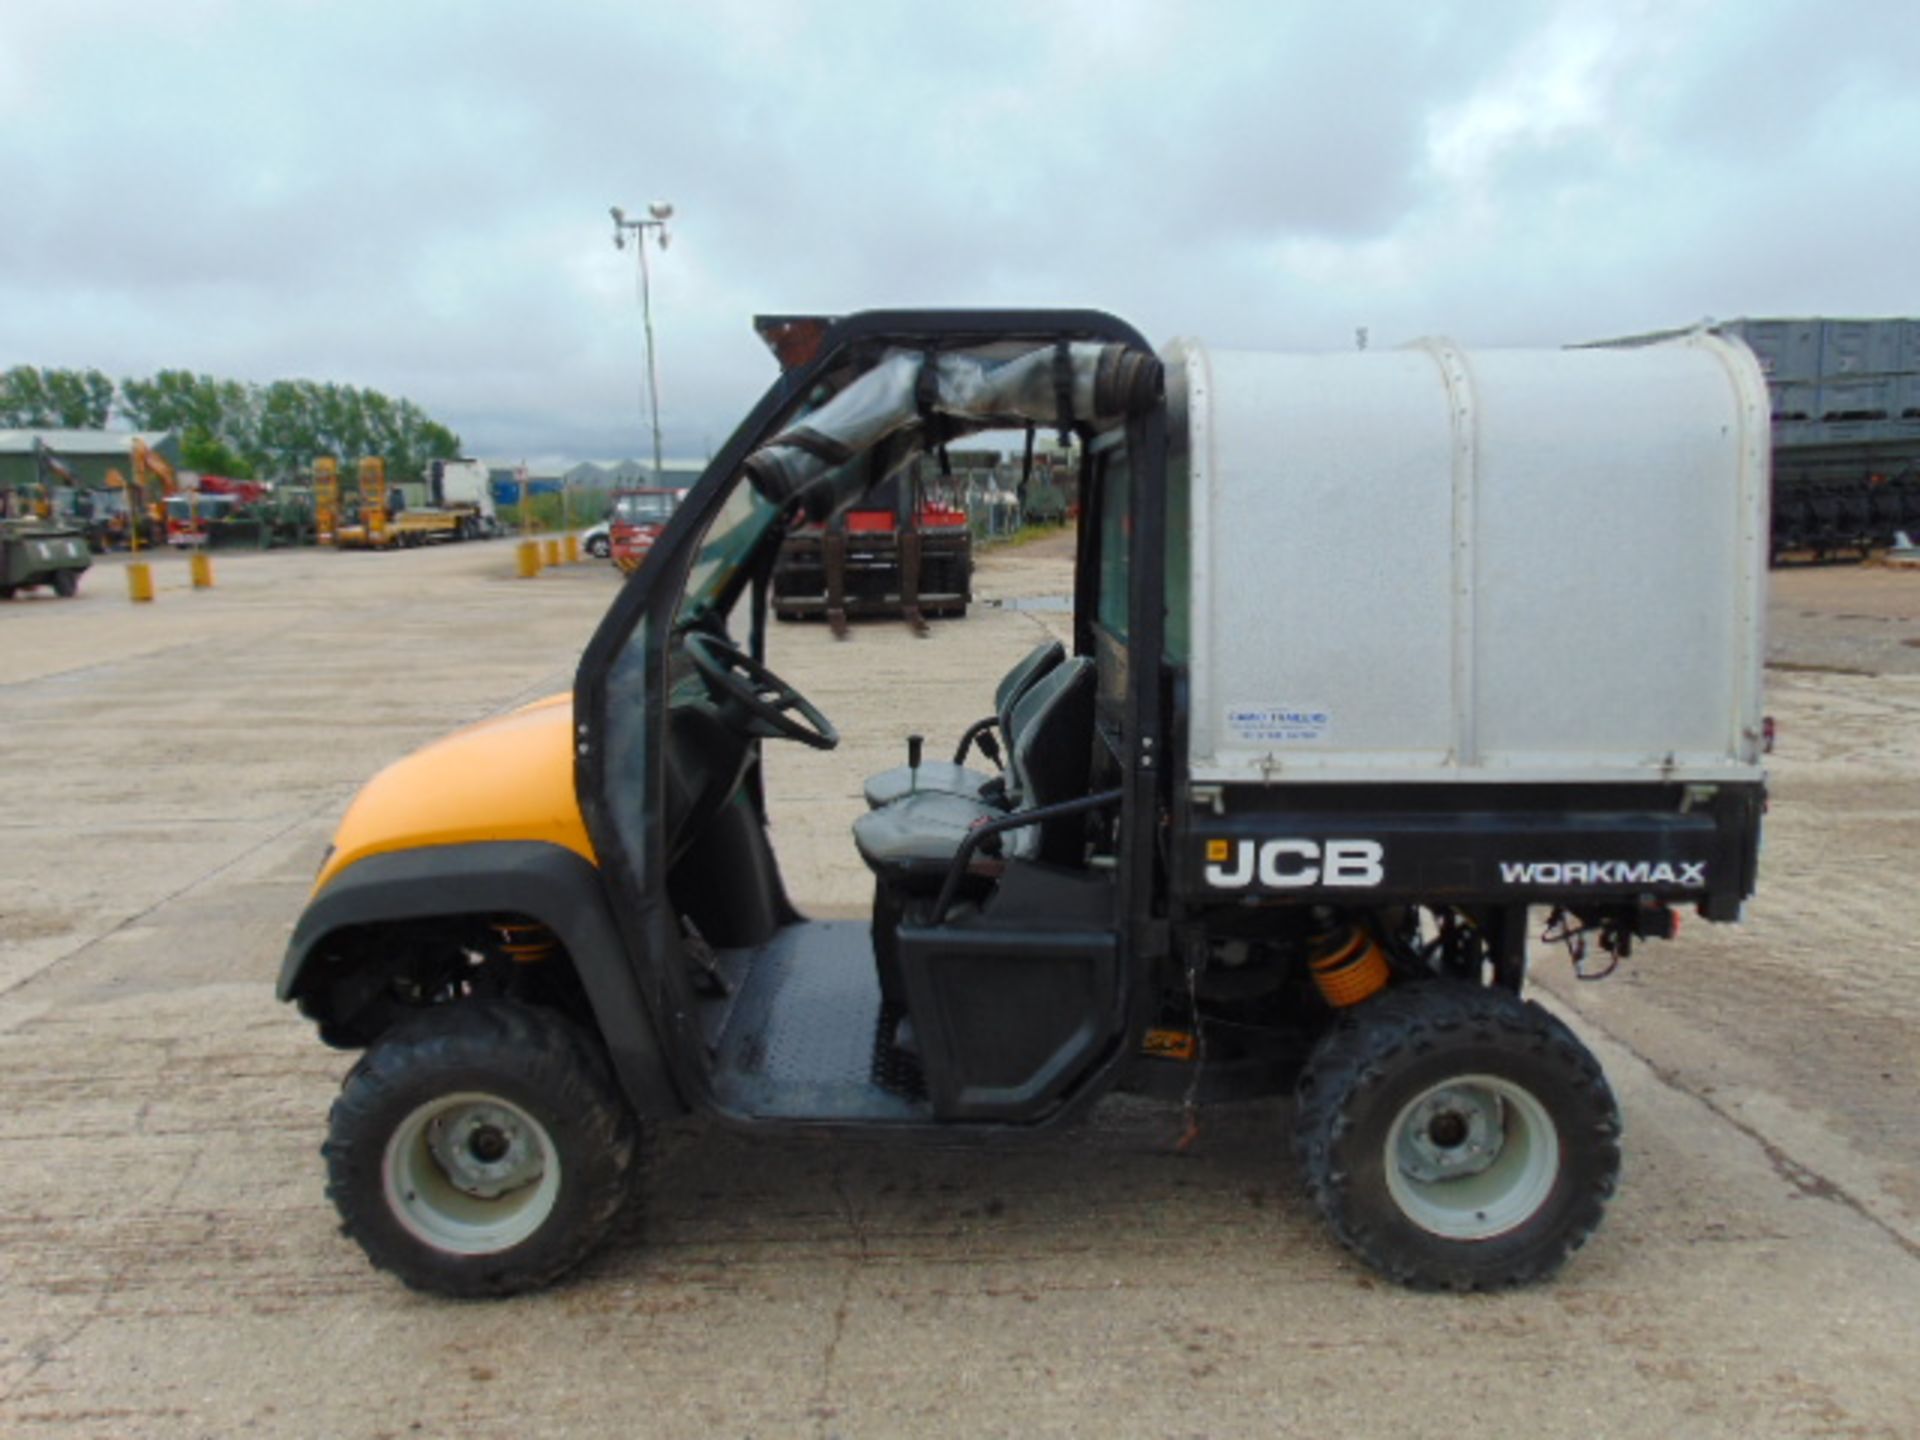 JCB Workmax 1000D 4WD Diesel Utility Vehicle UTV with Aluminium Rear Body - Image 4 of 21